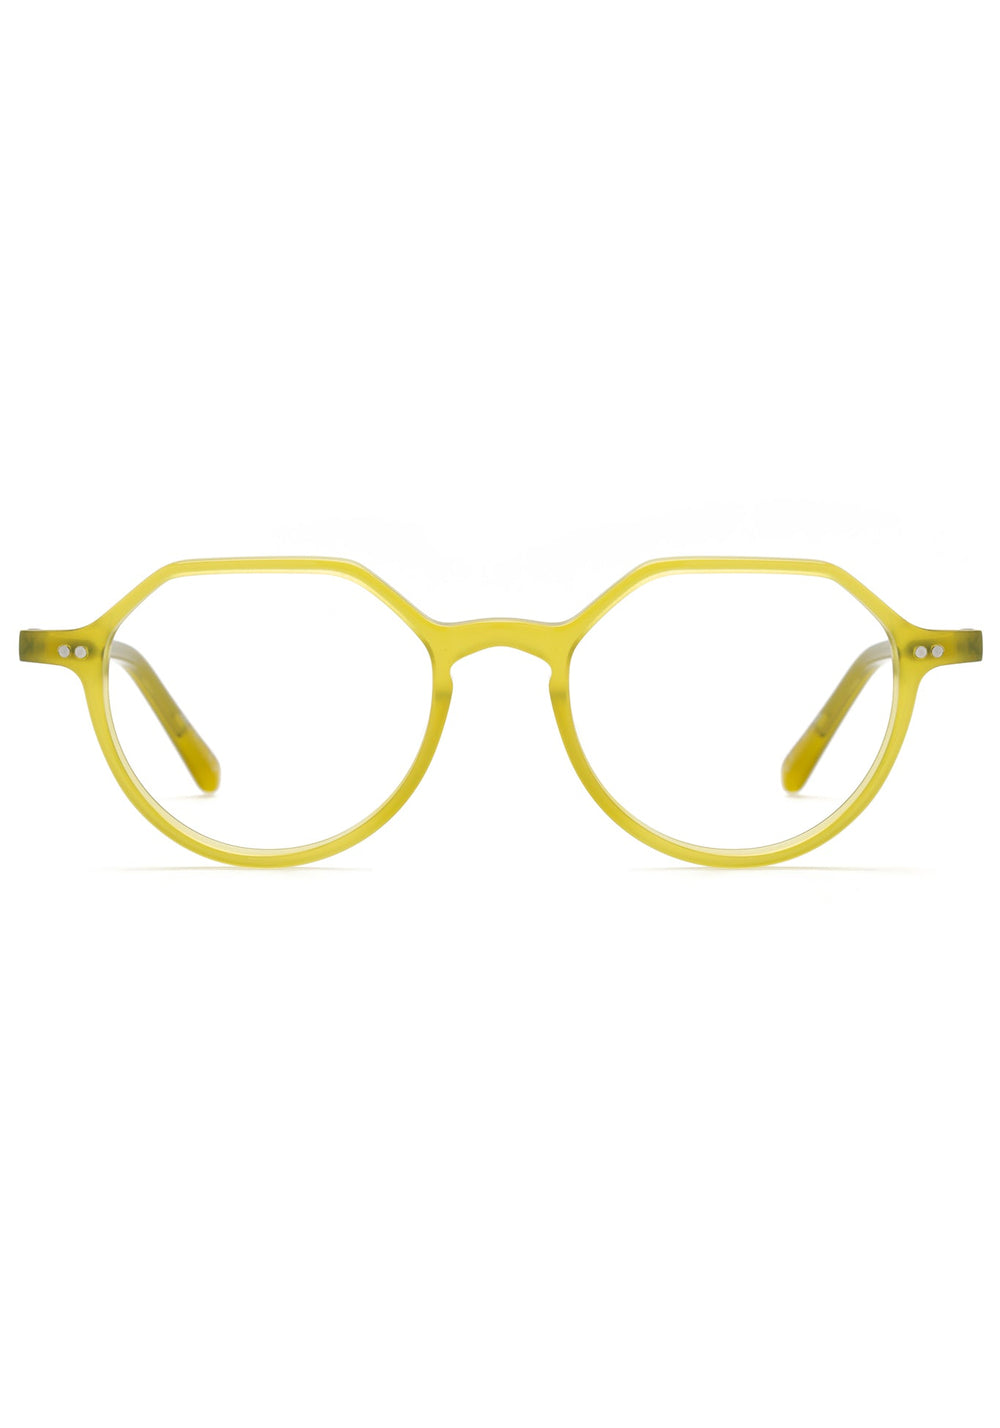 KREWE EYEGLASSES - JOEL | Chartreuse handcrafted, luxury yellow round glasses